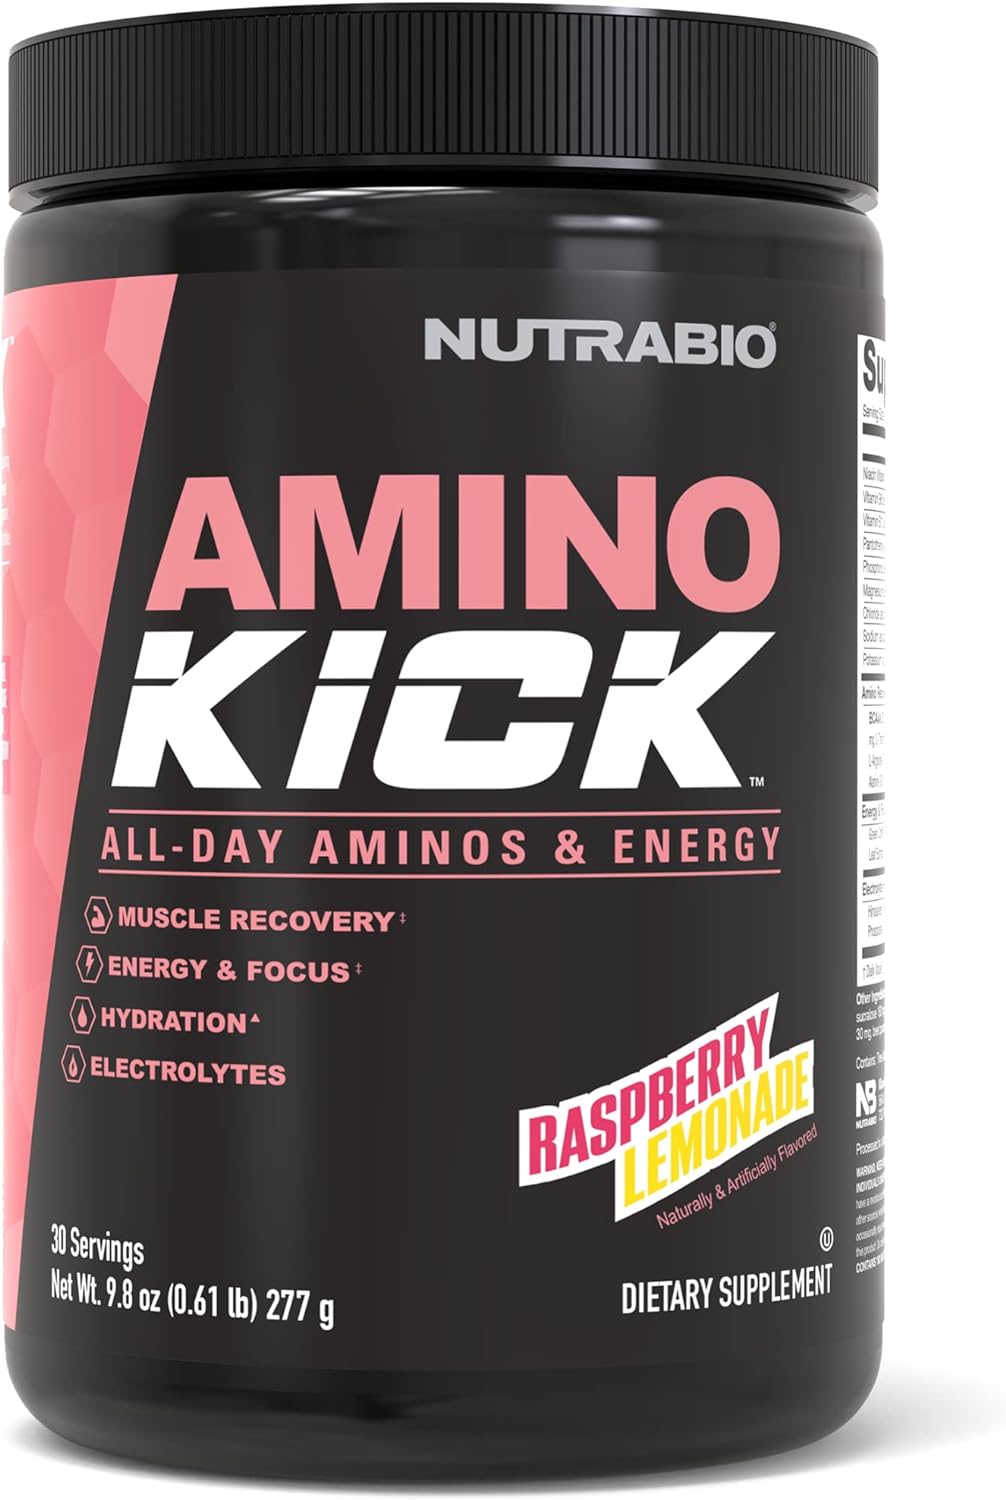 NutraBio Amino Kick - Amino Acid Energy Formula - BCAA's, Electrolytes for Hydration, Natural Caffeine 30 Servings (Raspberry Lemonade)